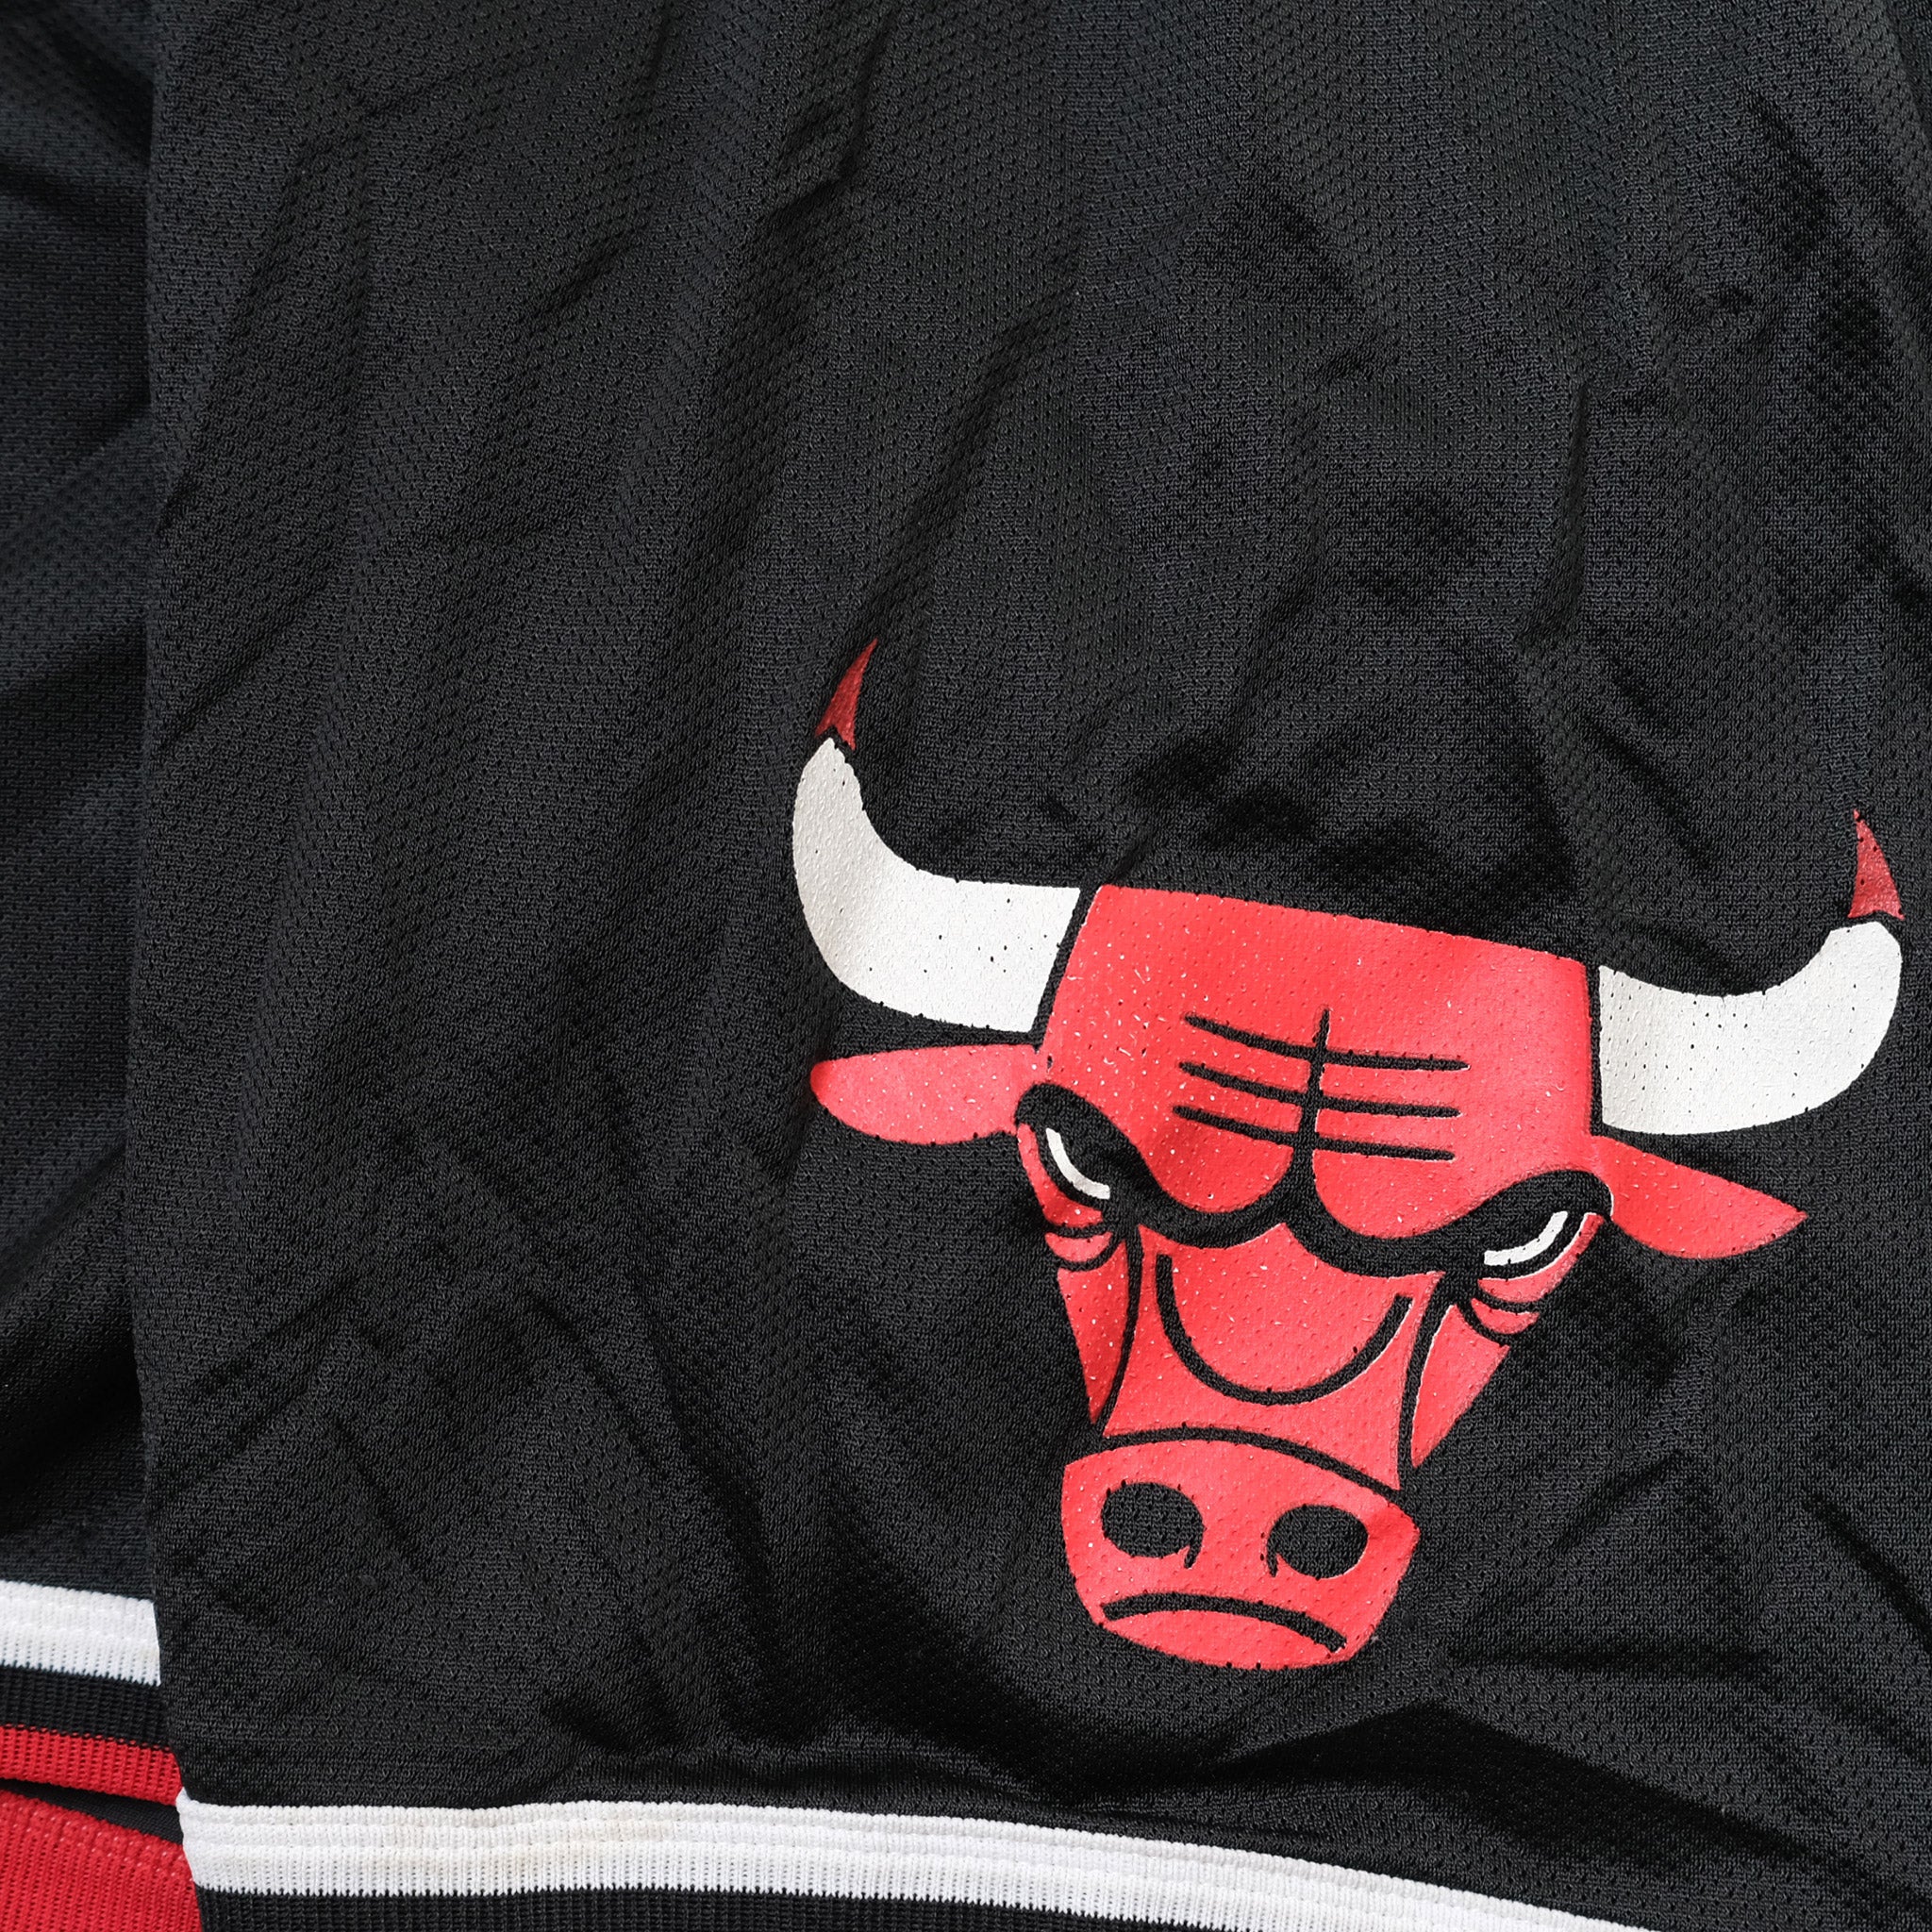 Vintage Chicago Bulls Champion Brand Shorts Size Medium(33-34